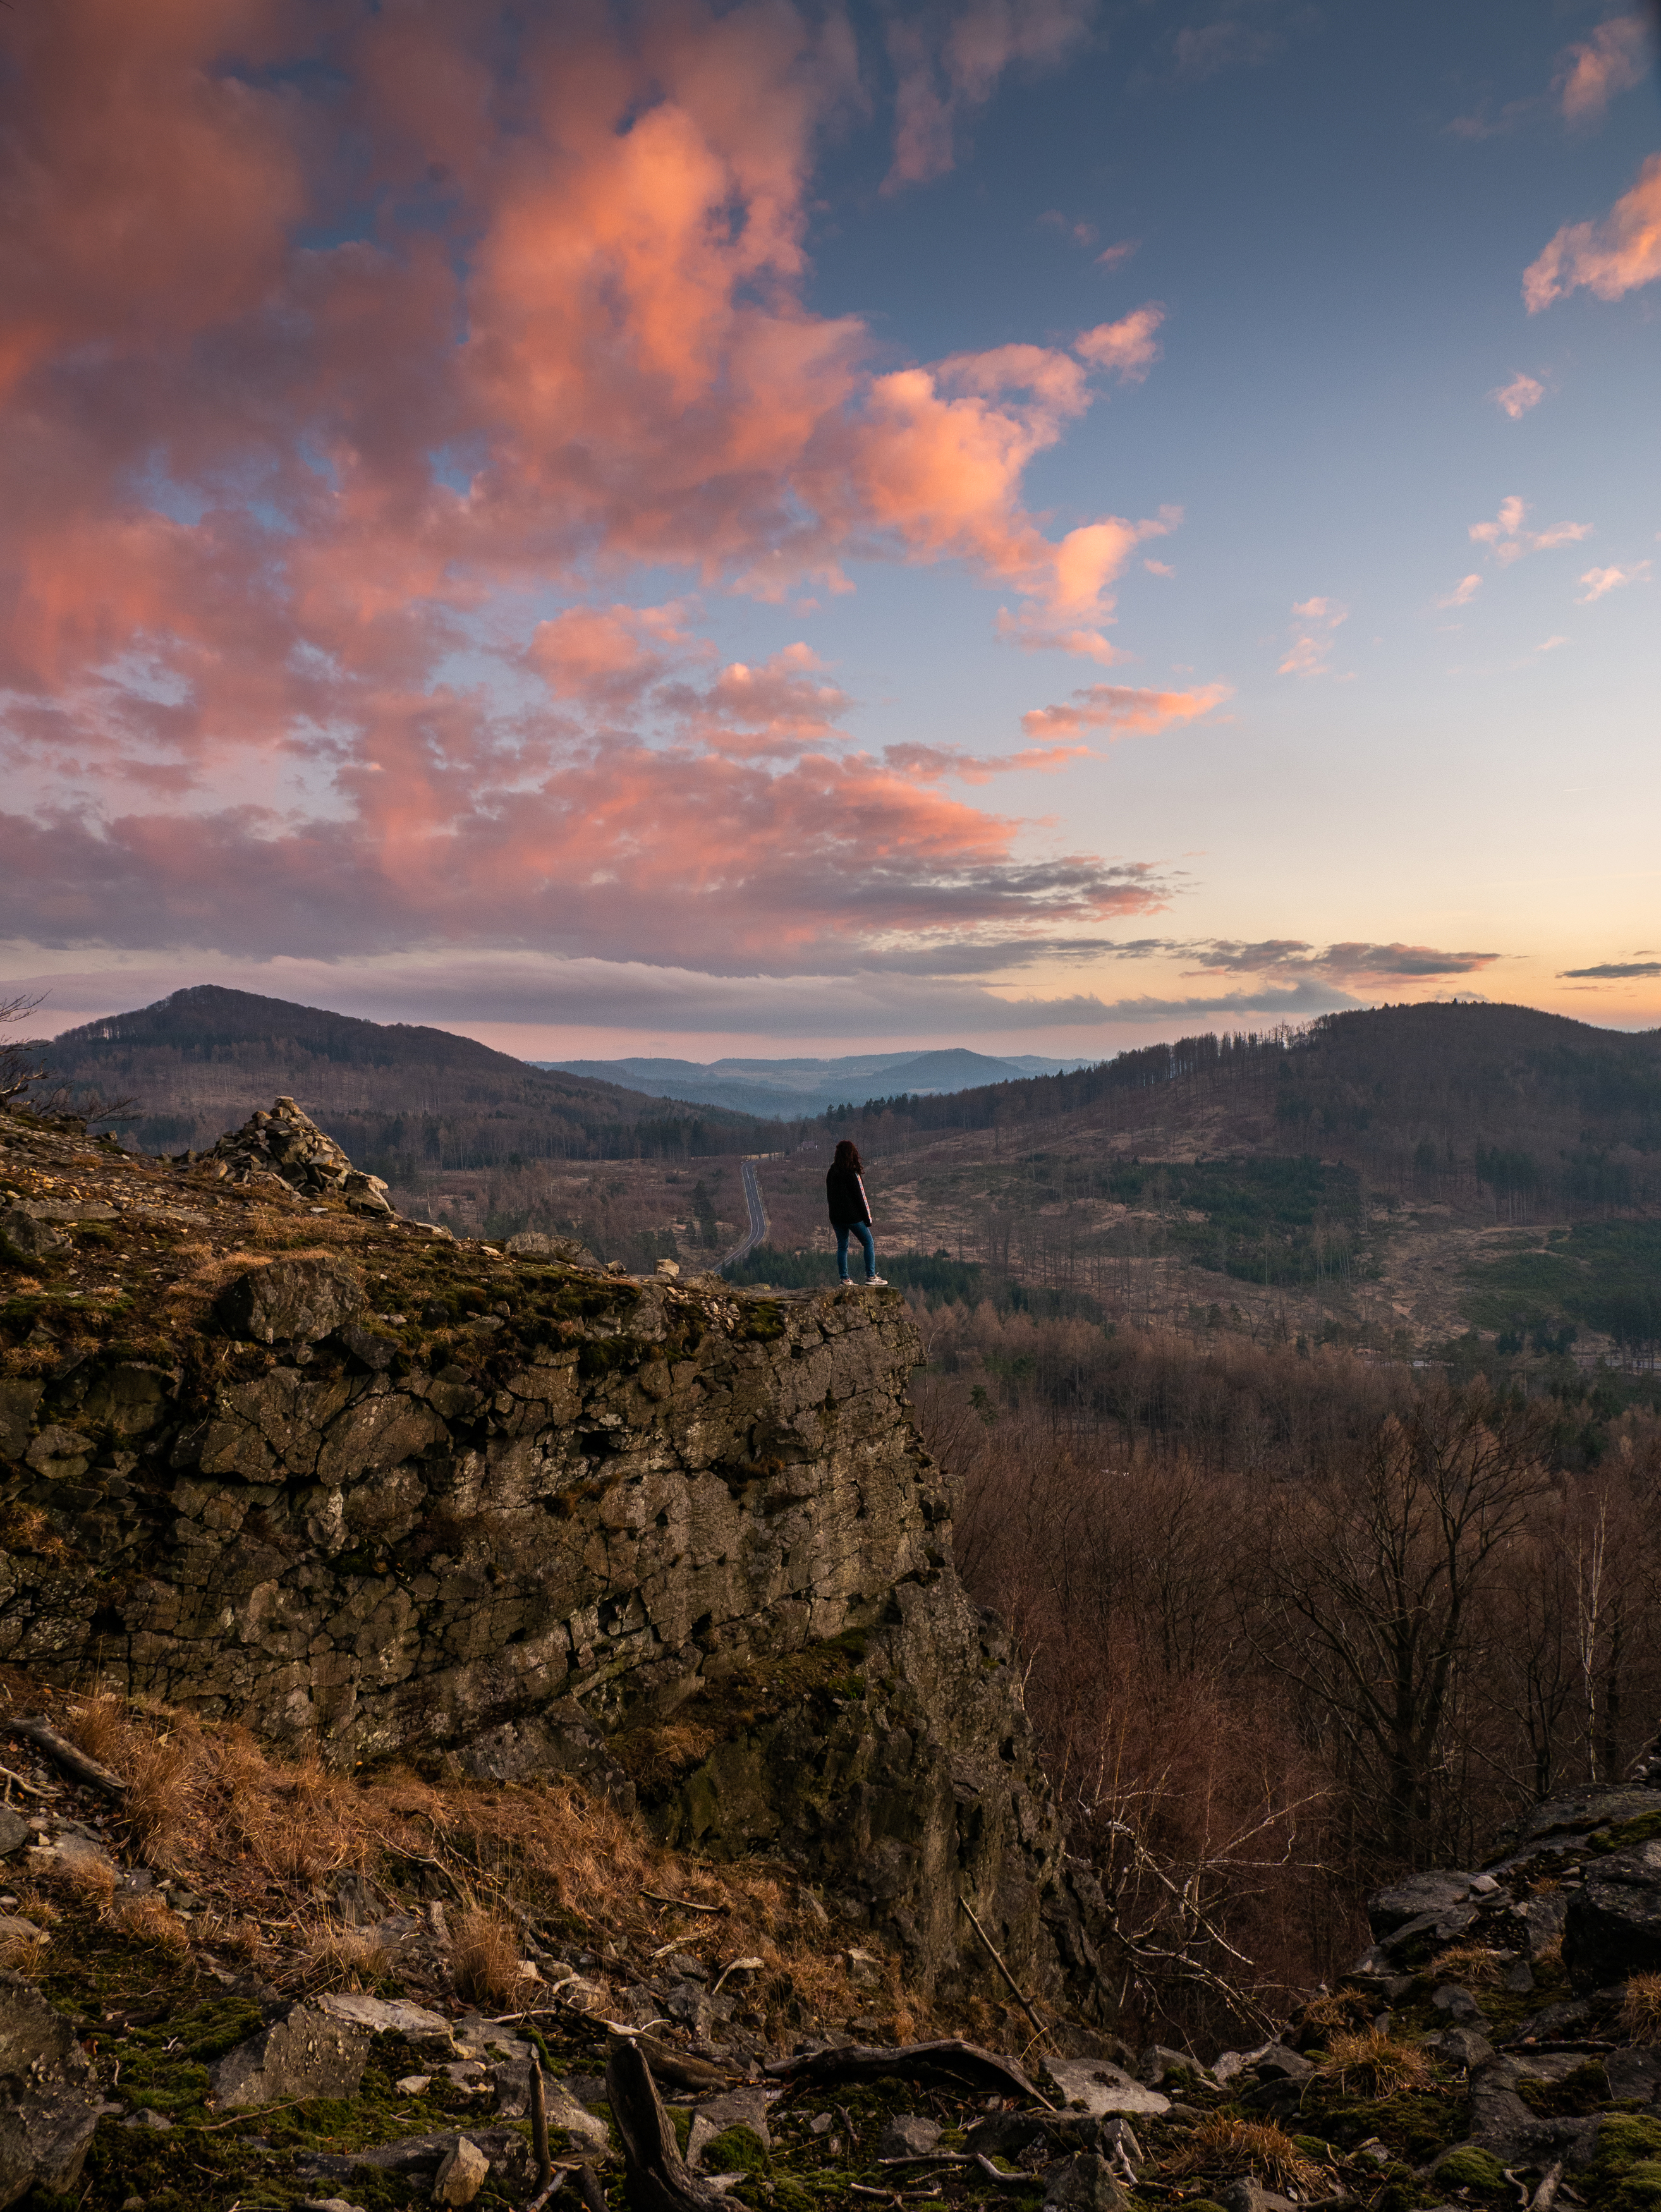 lusatian,lusatian mountains,sunset,sky,landscape,rock,person,perspective, Slavomír Gajdoš